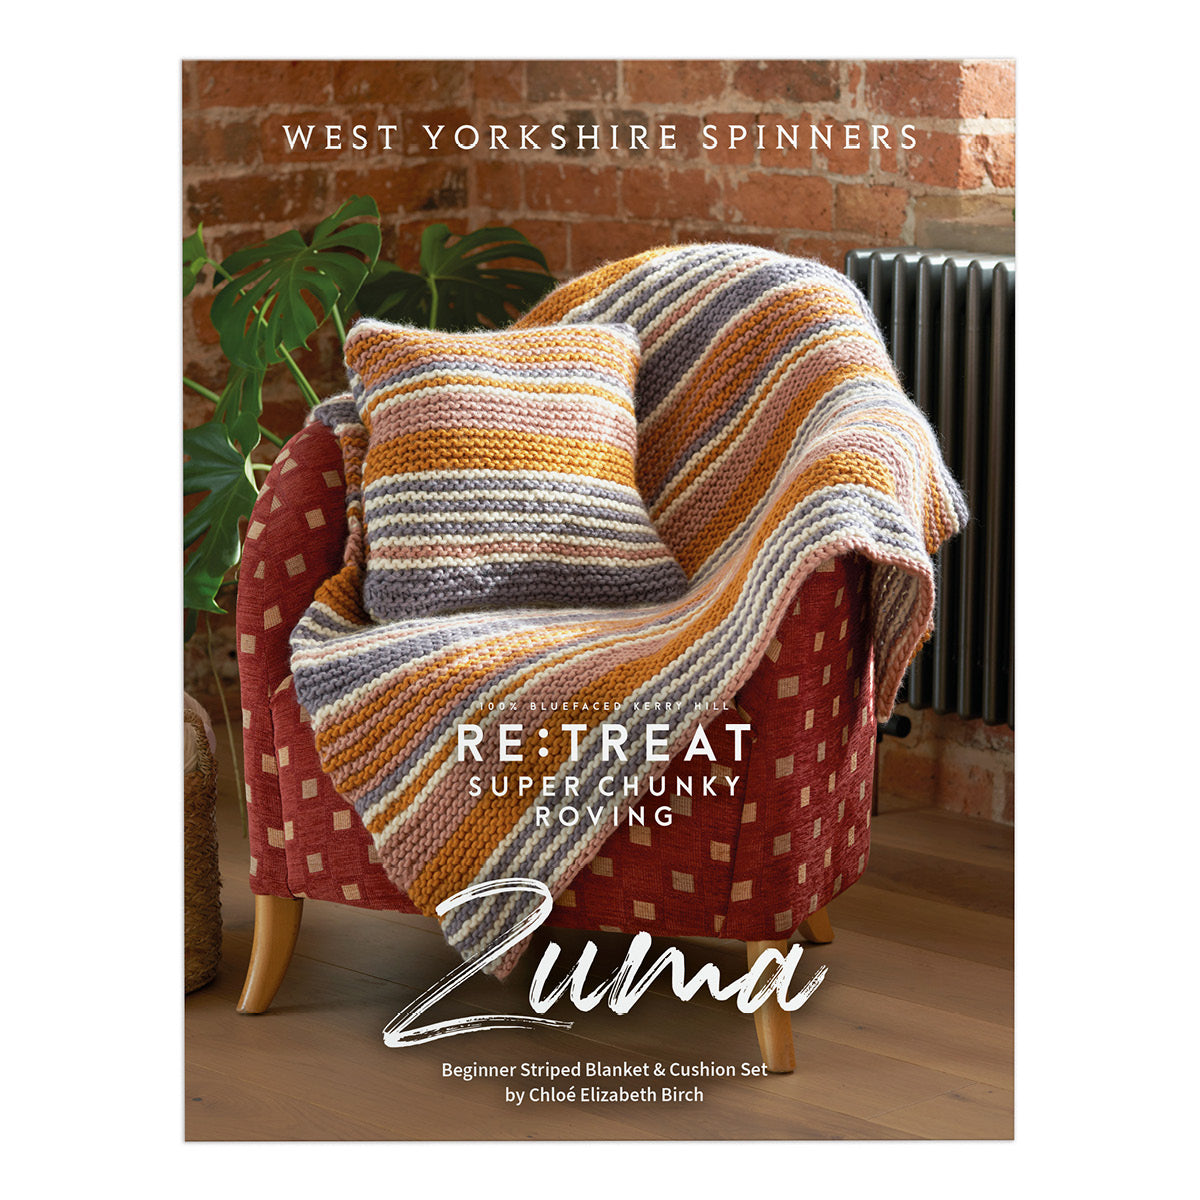 Zuma Blanket and Cushion Kit